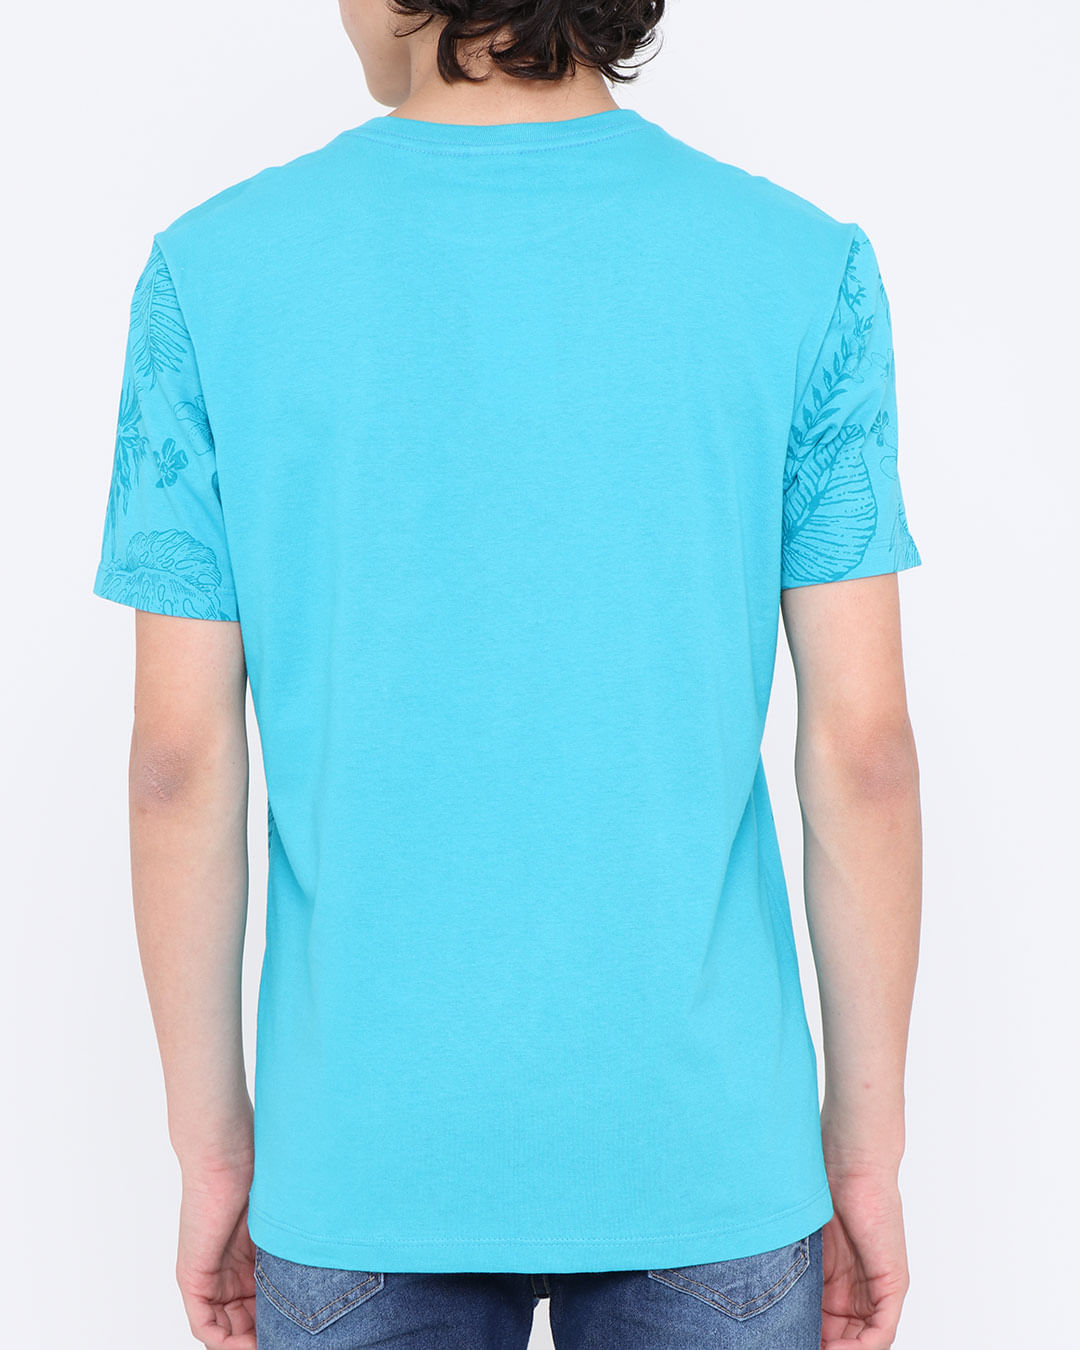 Camiseta-Juvenil-Manga-Curta-Estampa-Floral-Kamylus-Azul